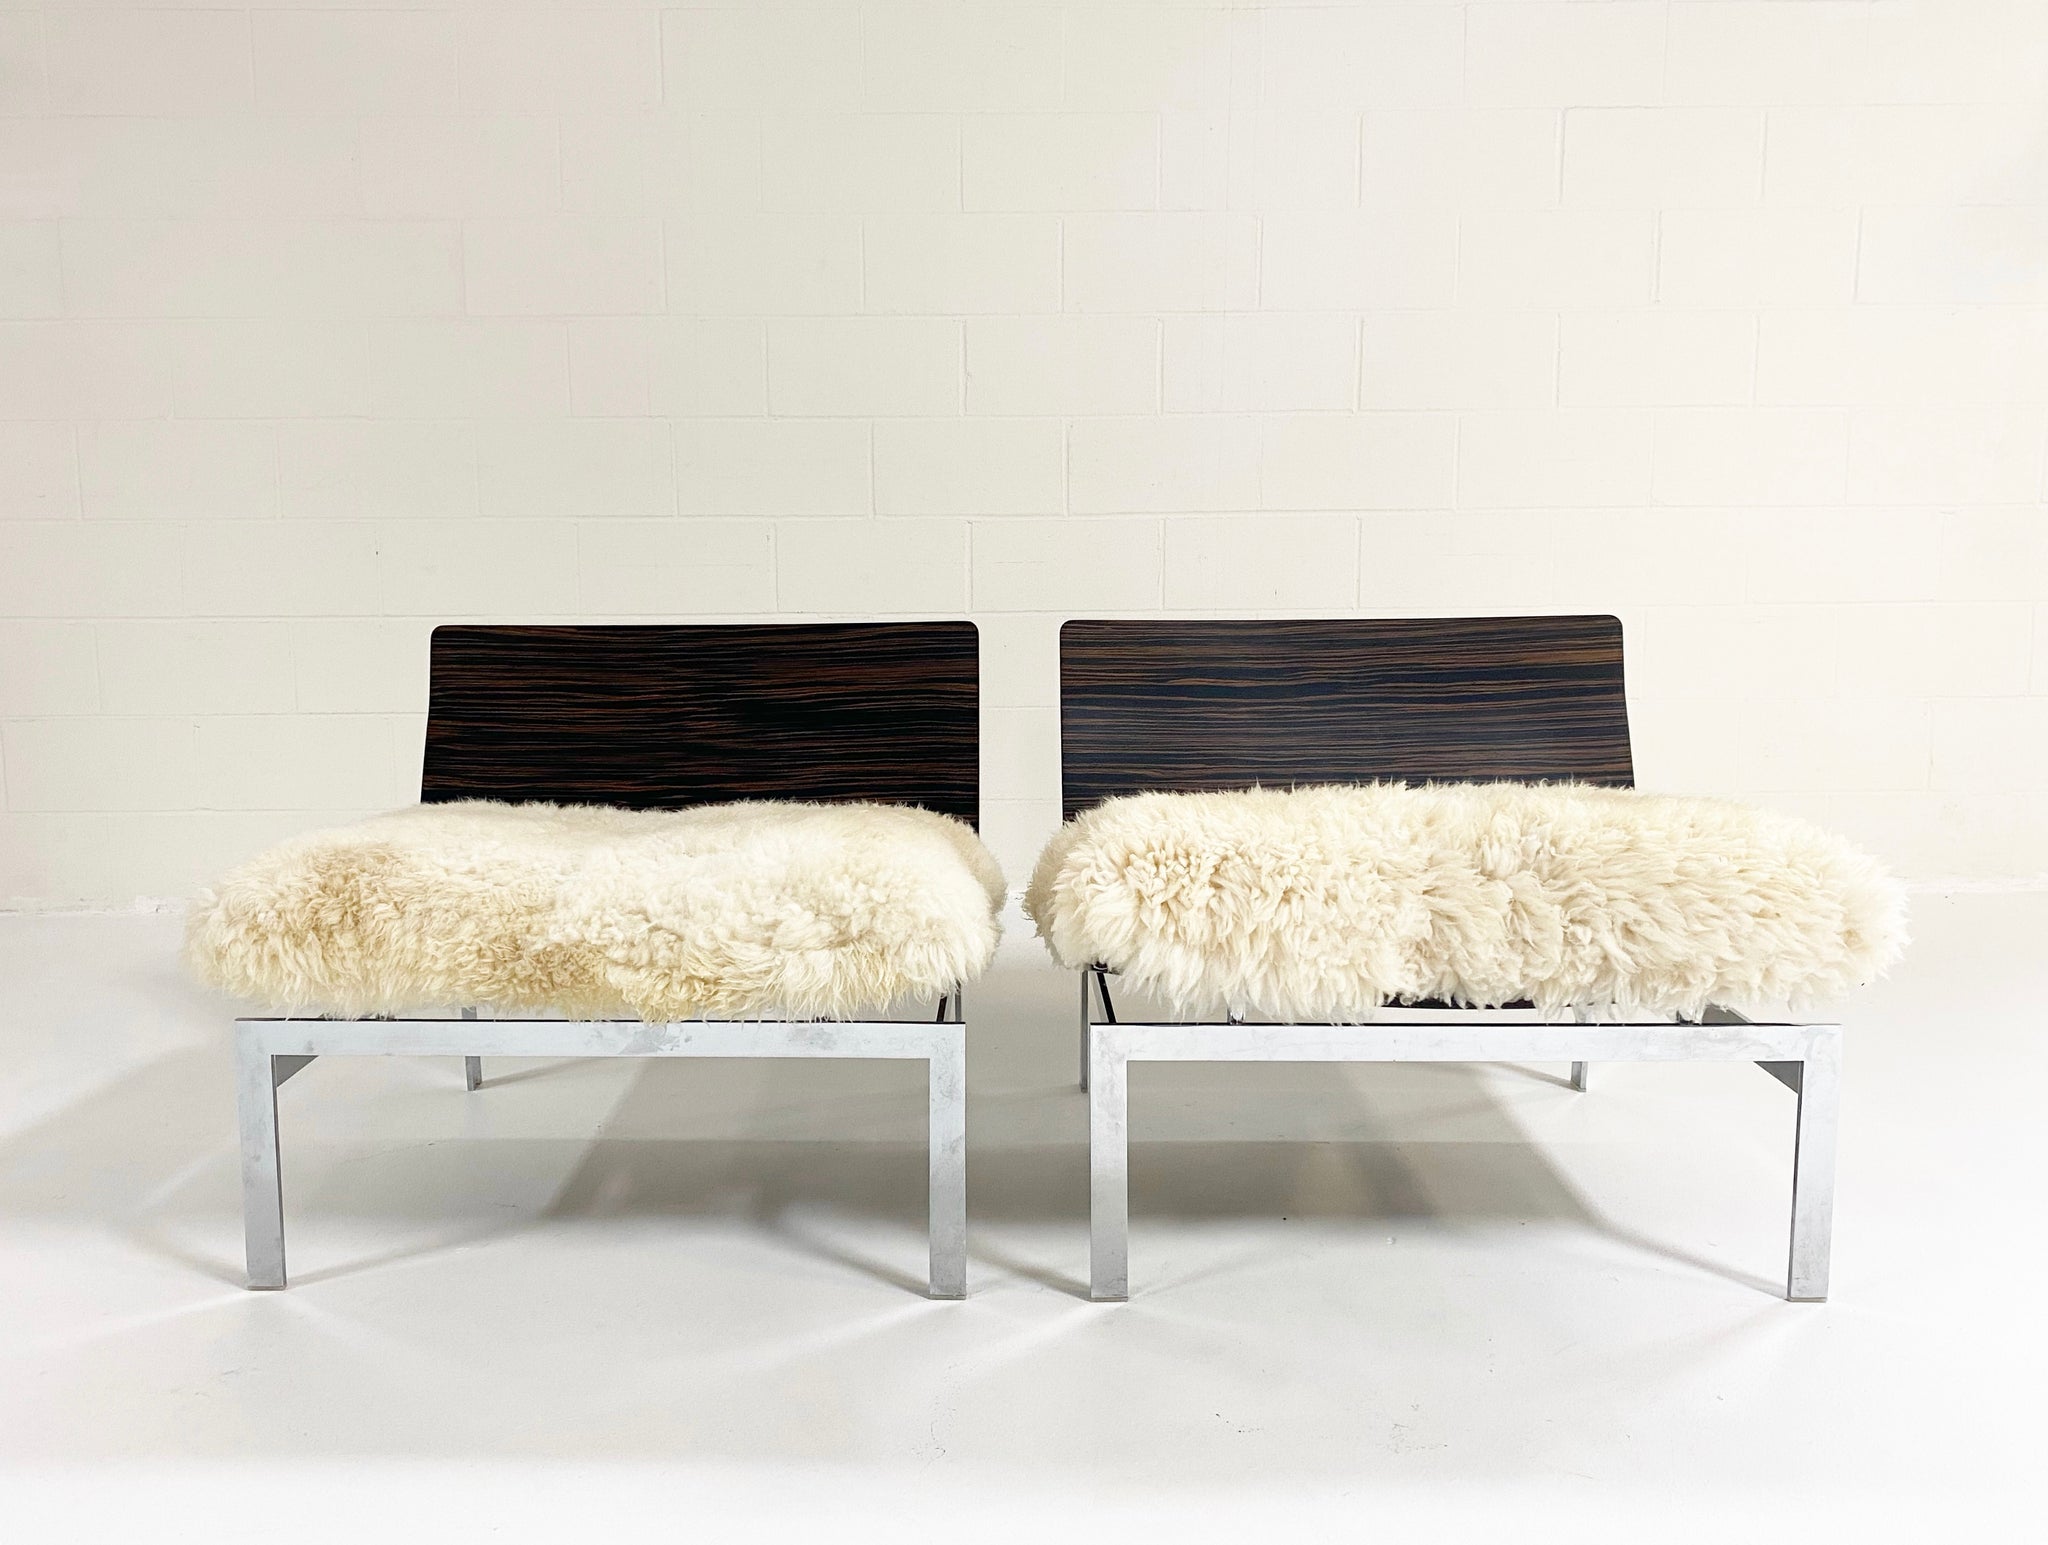 Words Chairs with California Sheepskin Cushions